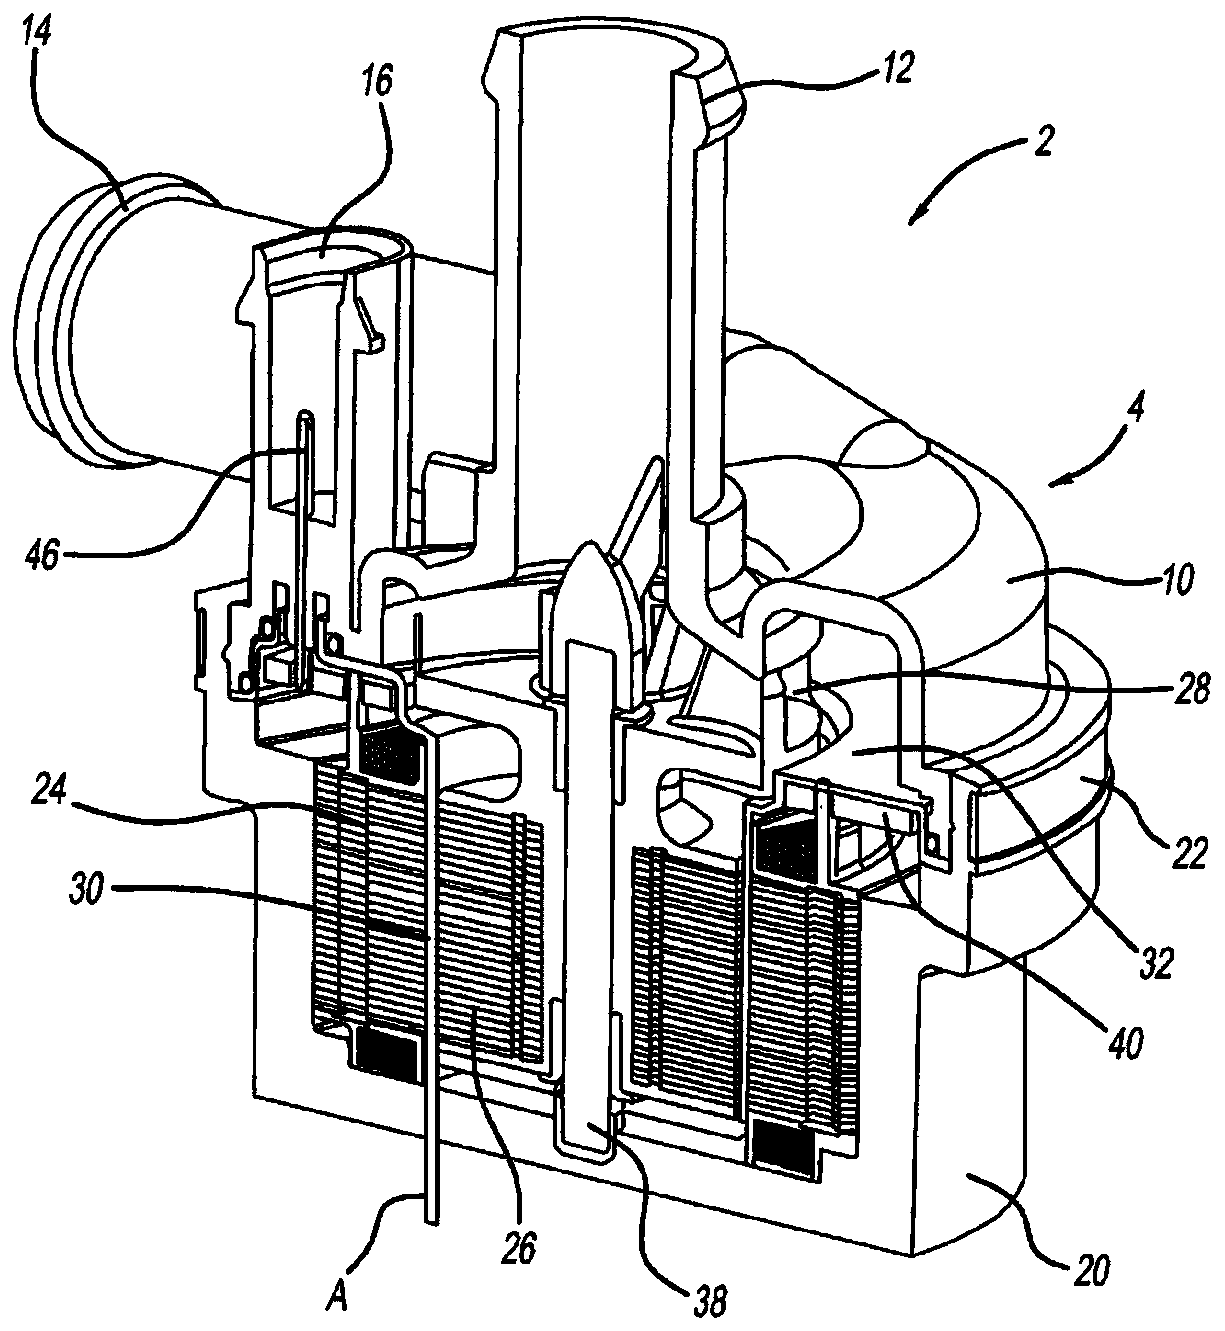 Method for assembling a water pump